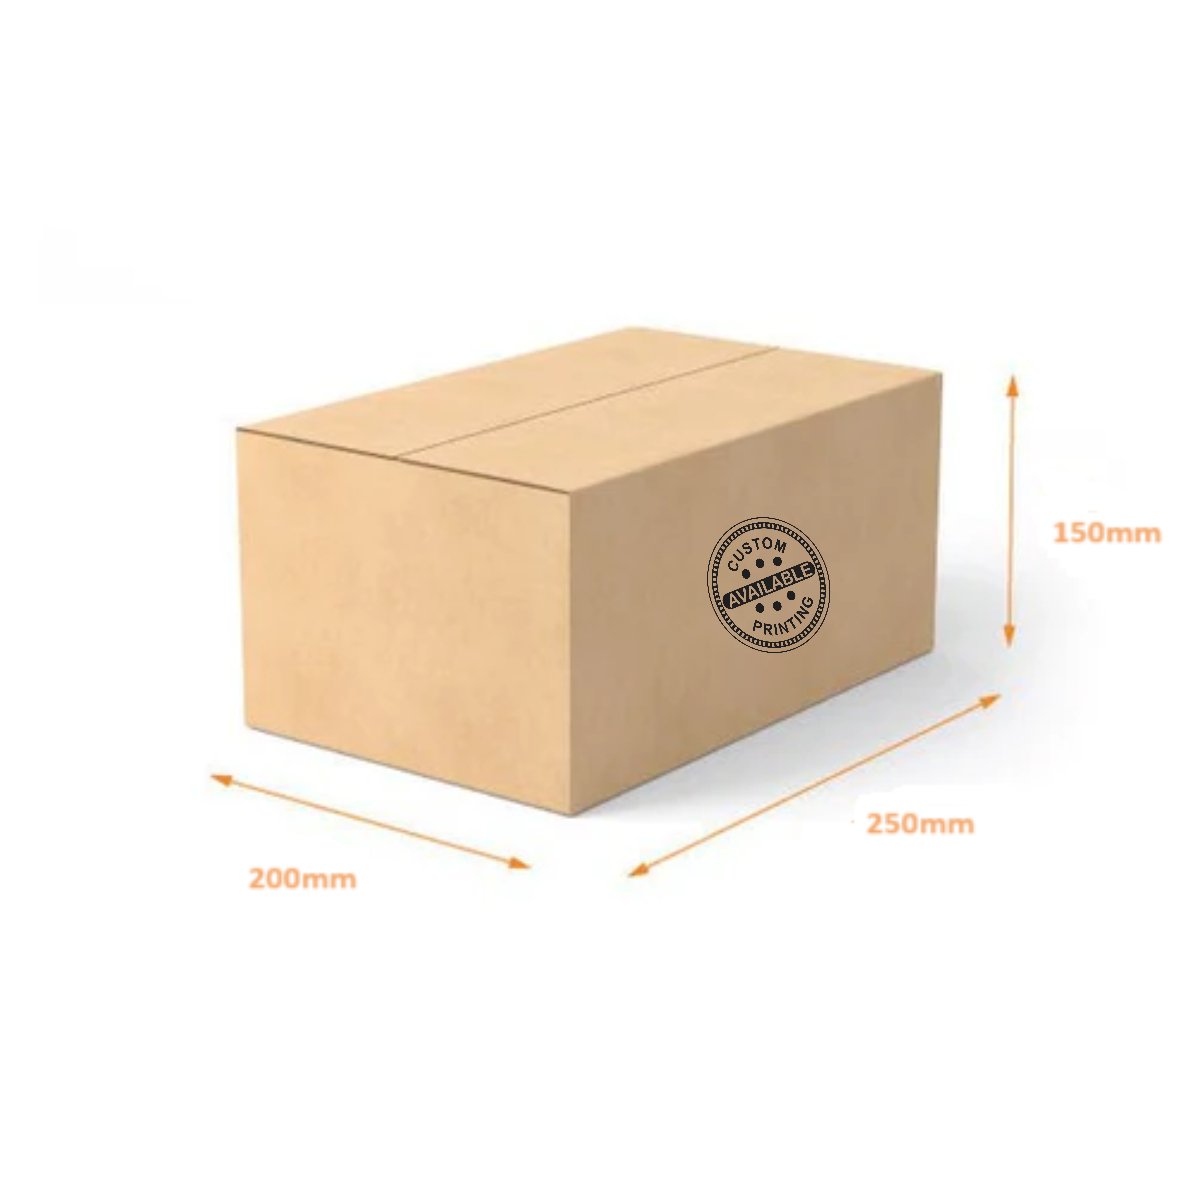 RSC Shipping Carton 339749 - 100% Recyclable - PackQueen